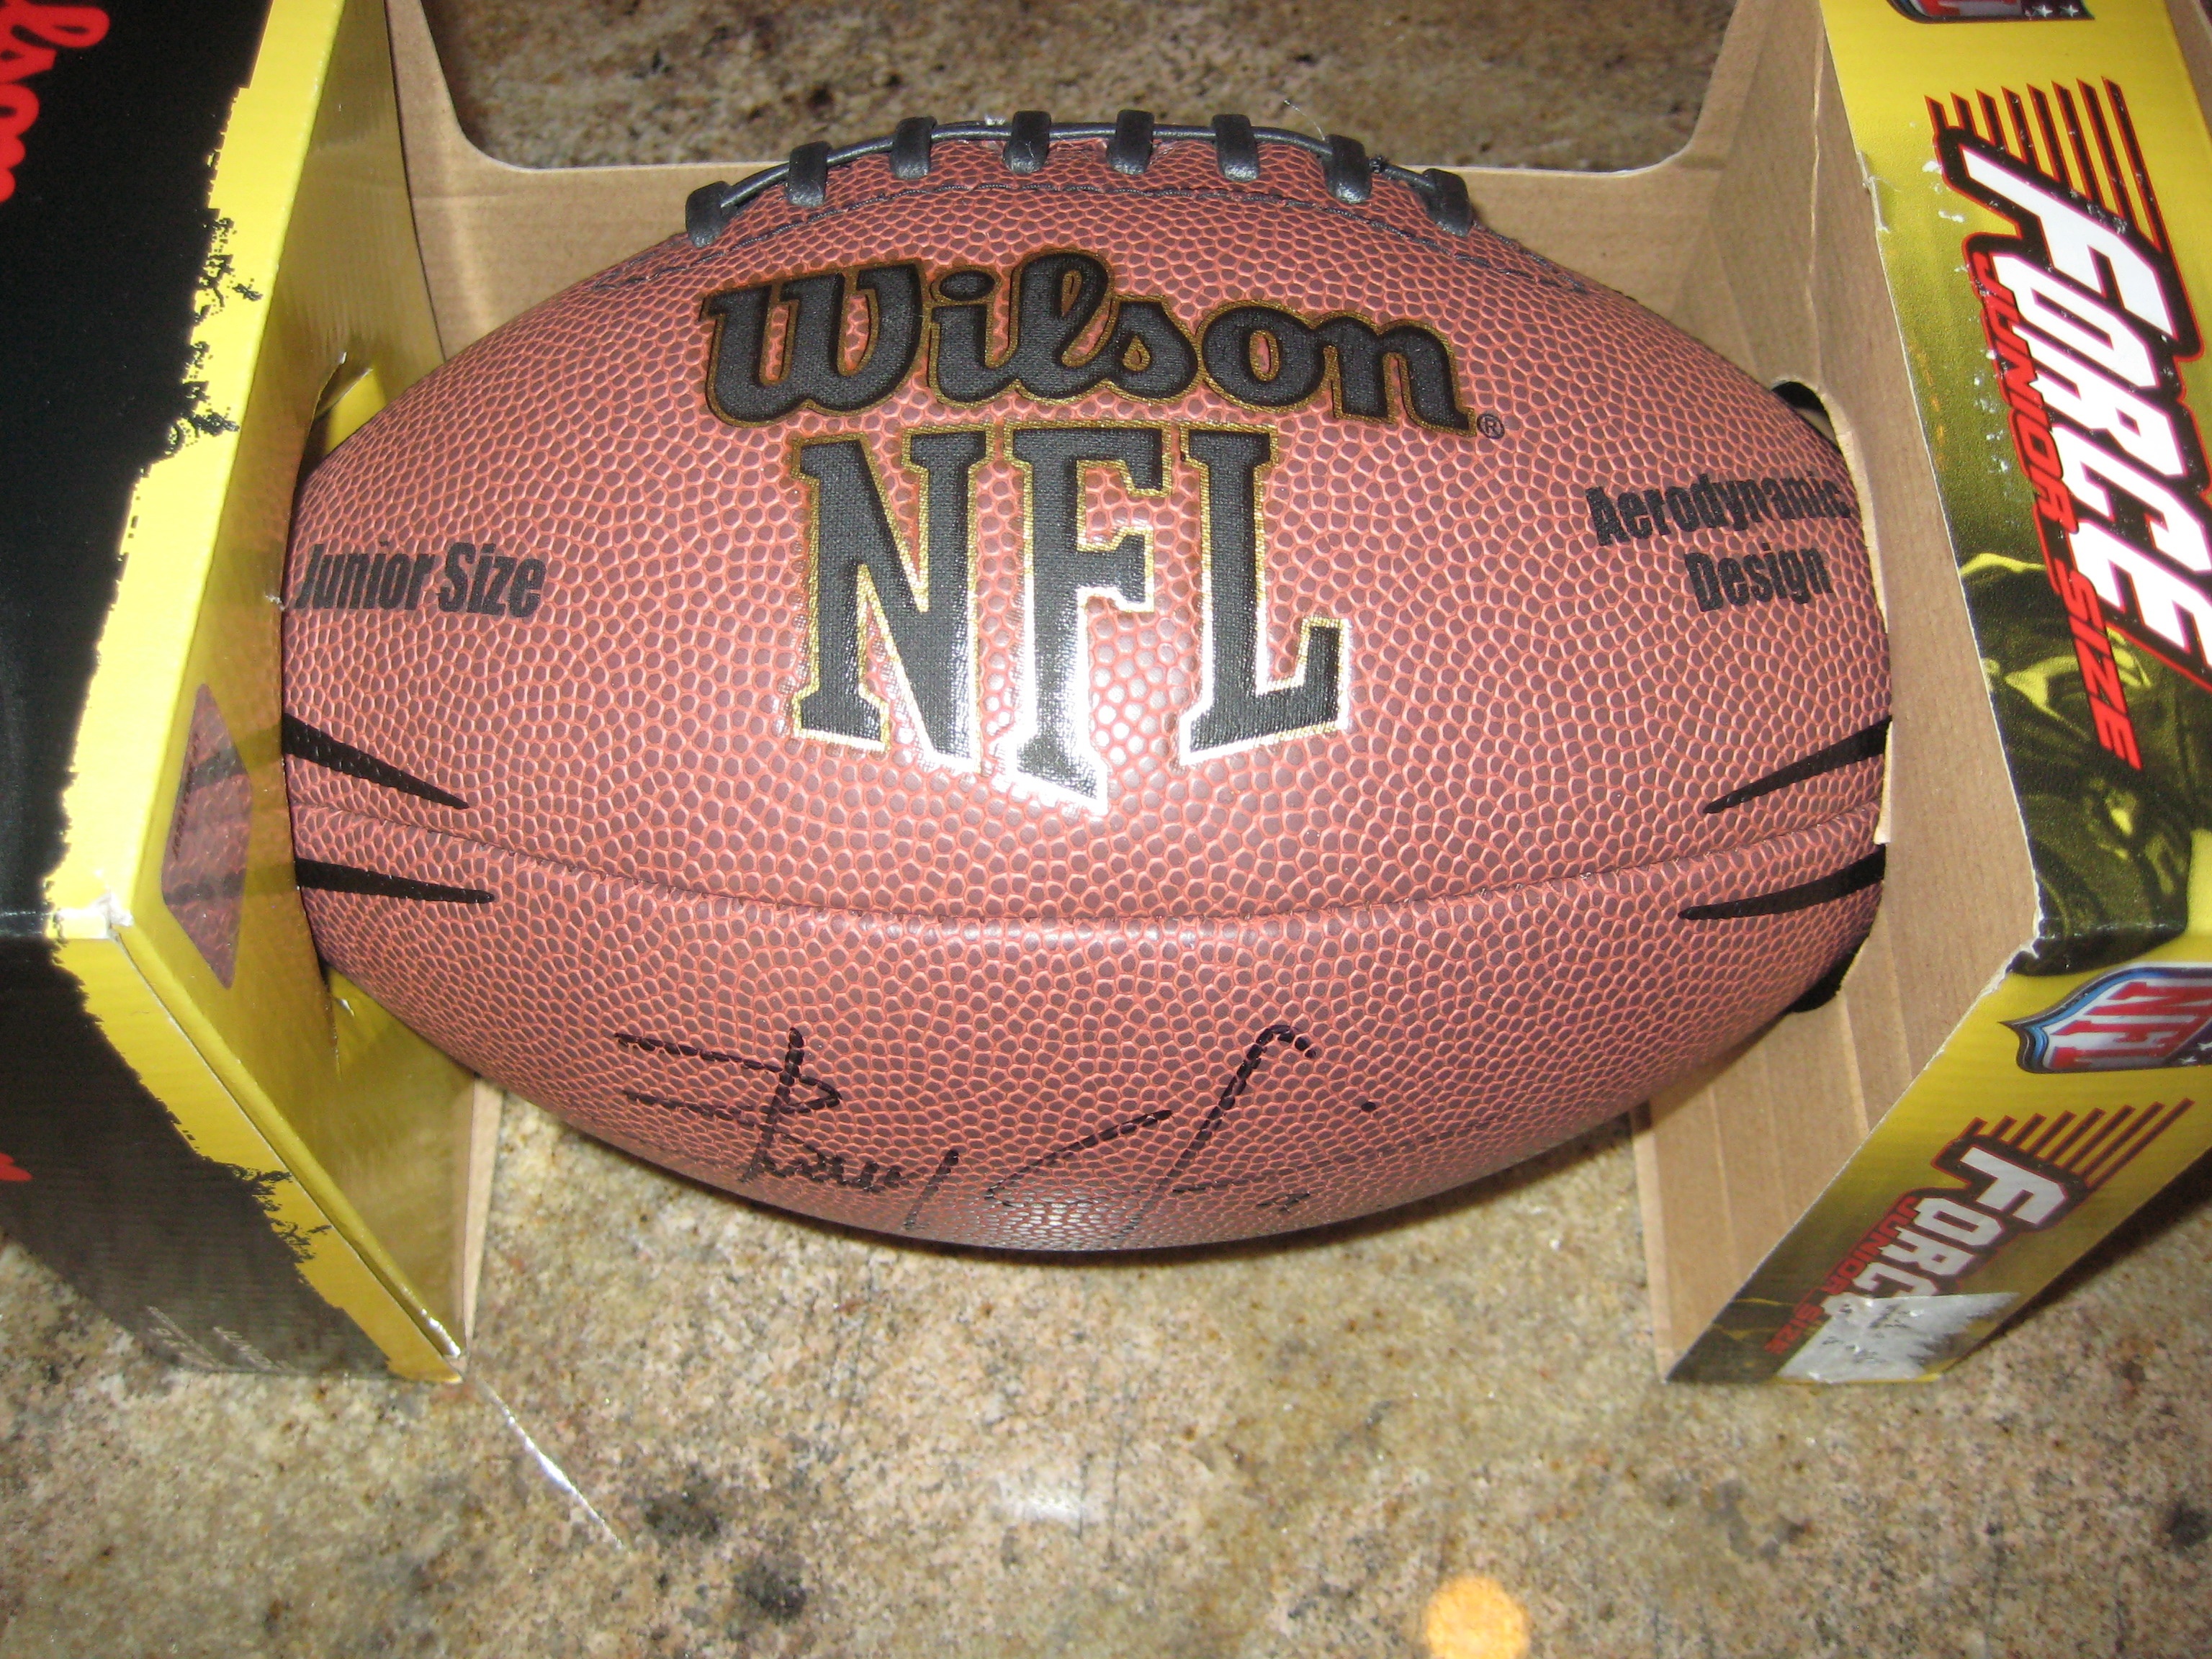 File:Brady Quinn Signed NFL football (6778754569).jpg - Wikimedia Commons